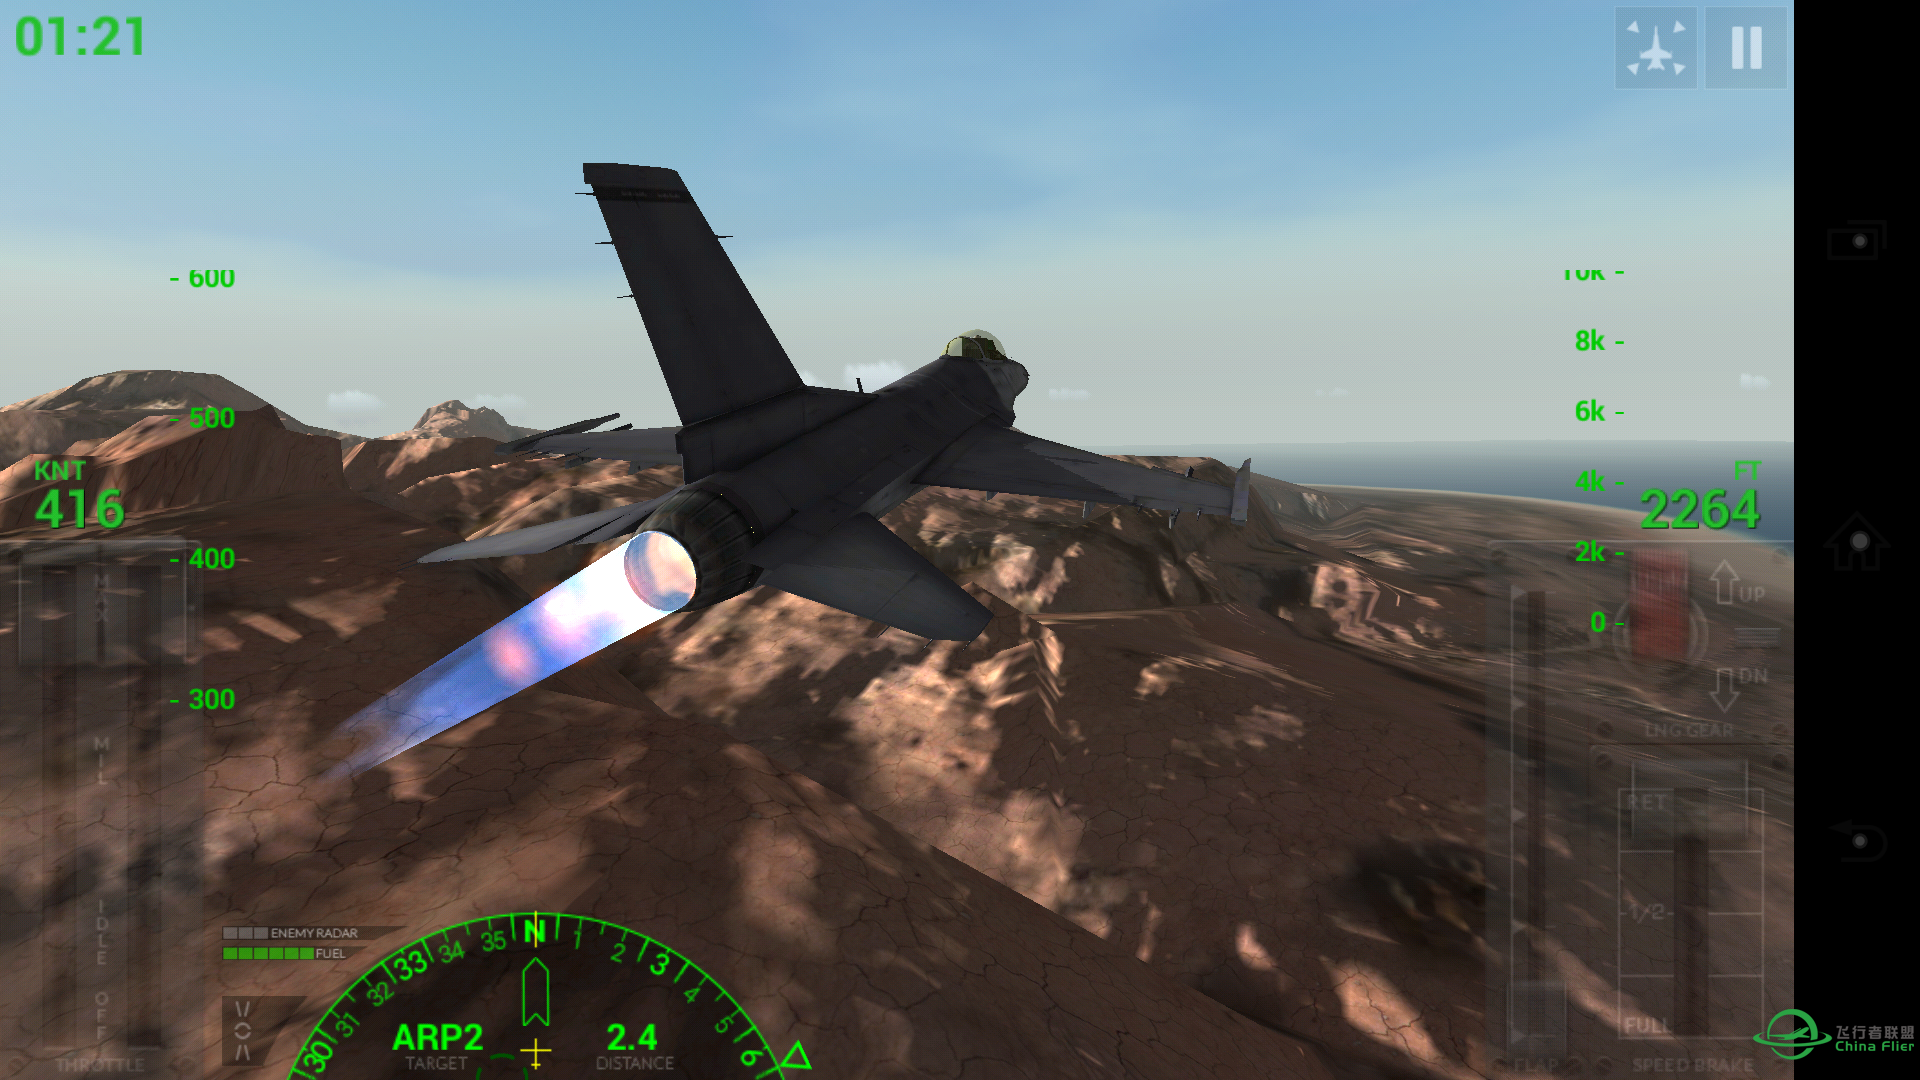 [截图而已]F18 Carrier Landing2 Pro-8668 